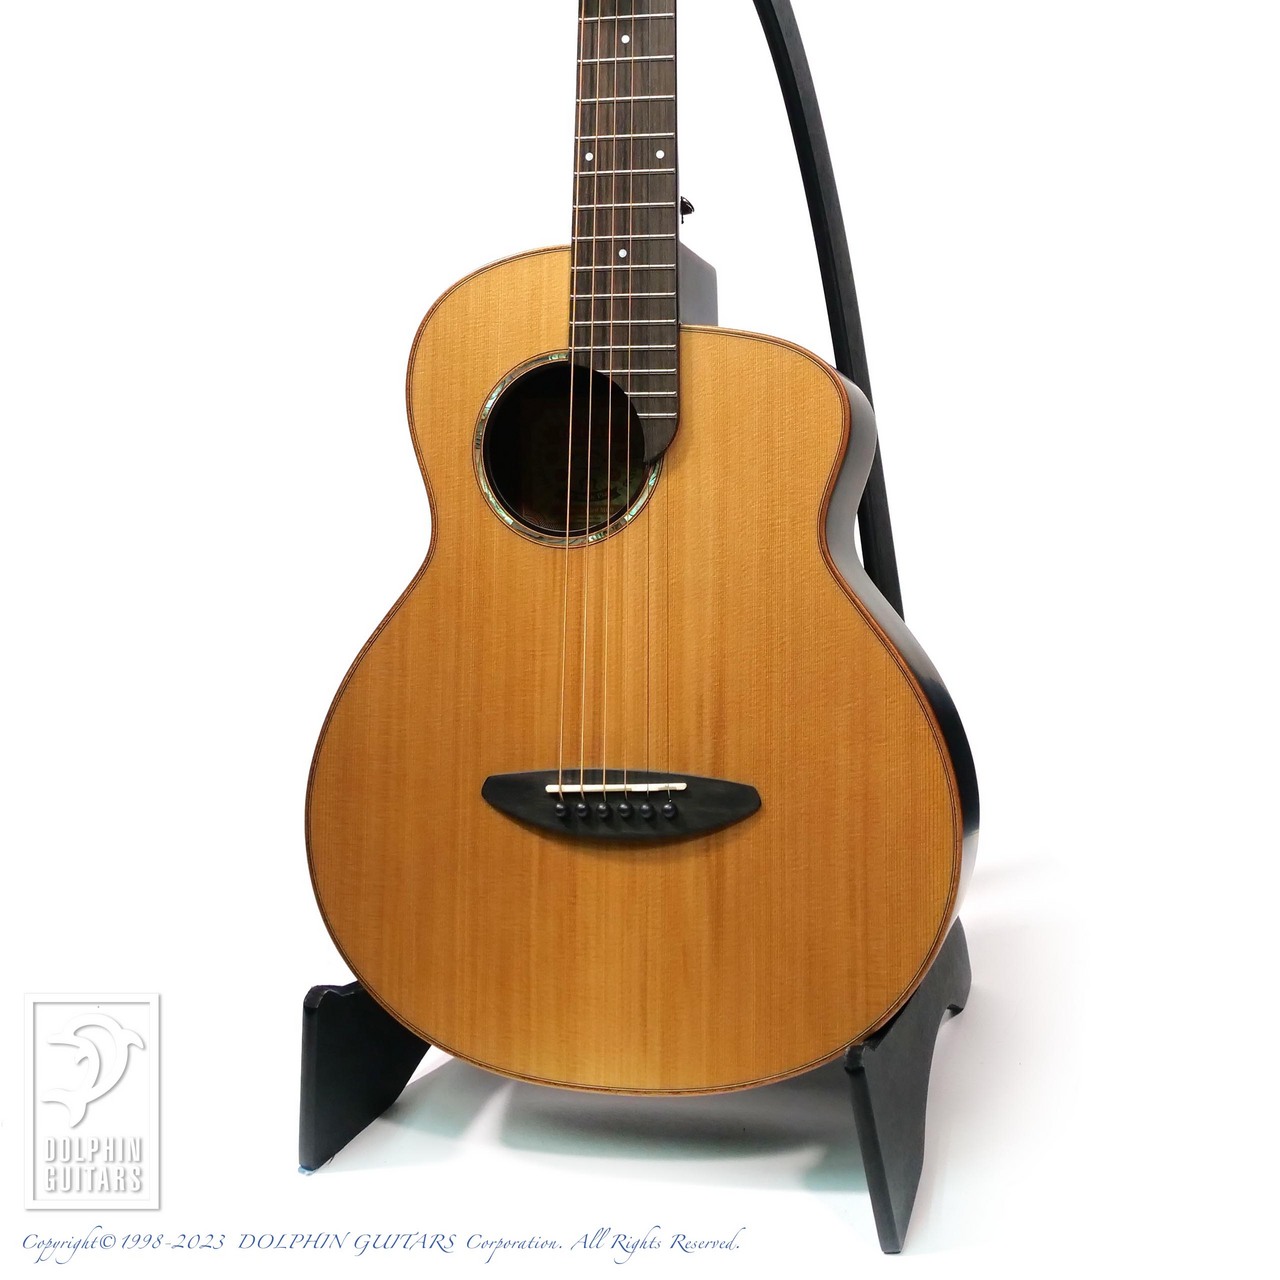 aNueNue M100 Original Series Spruce Mahogany Guitar